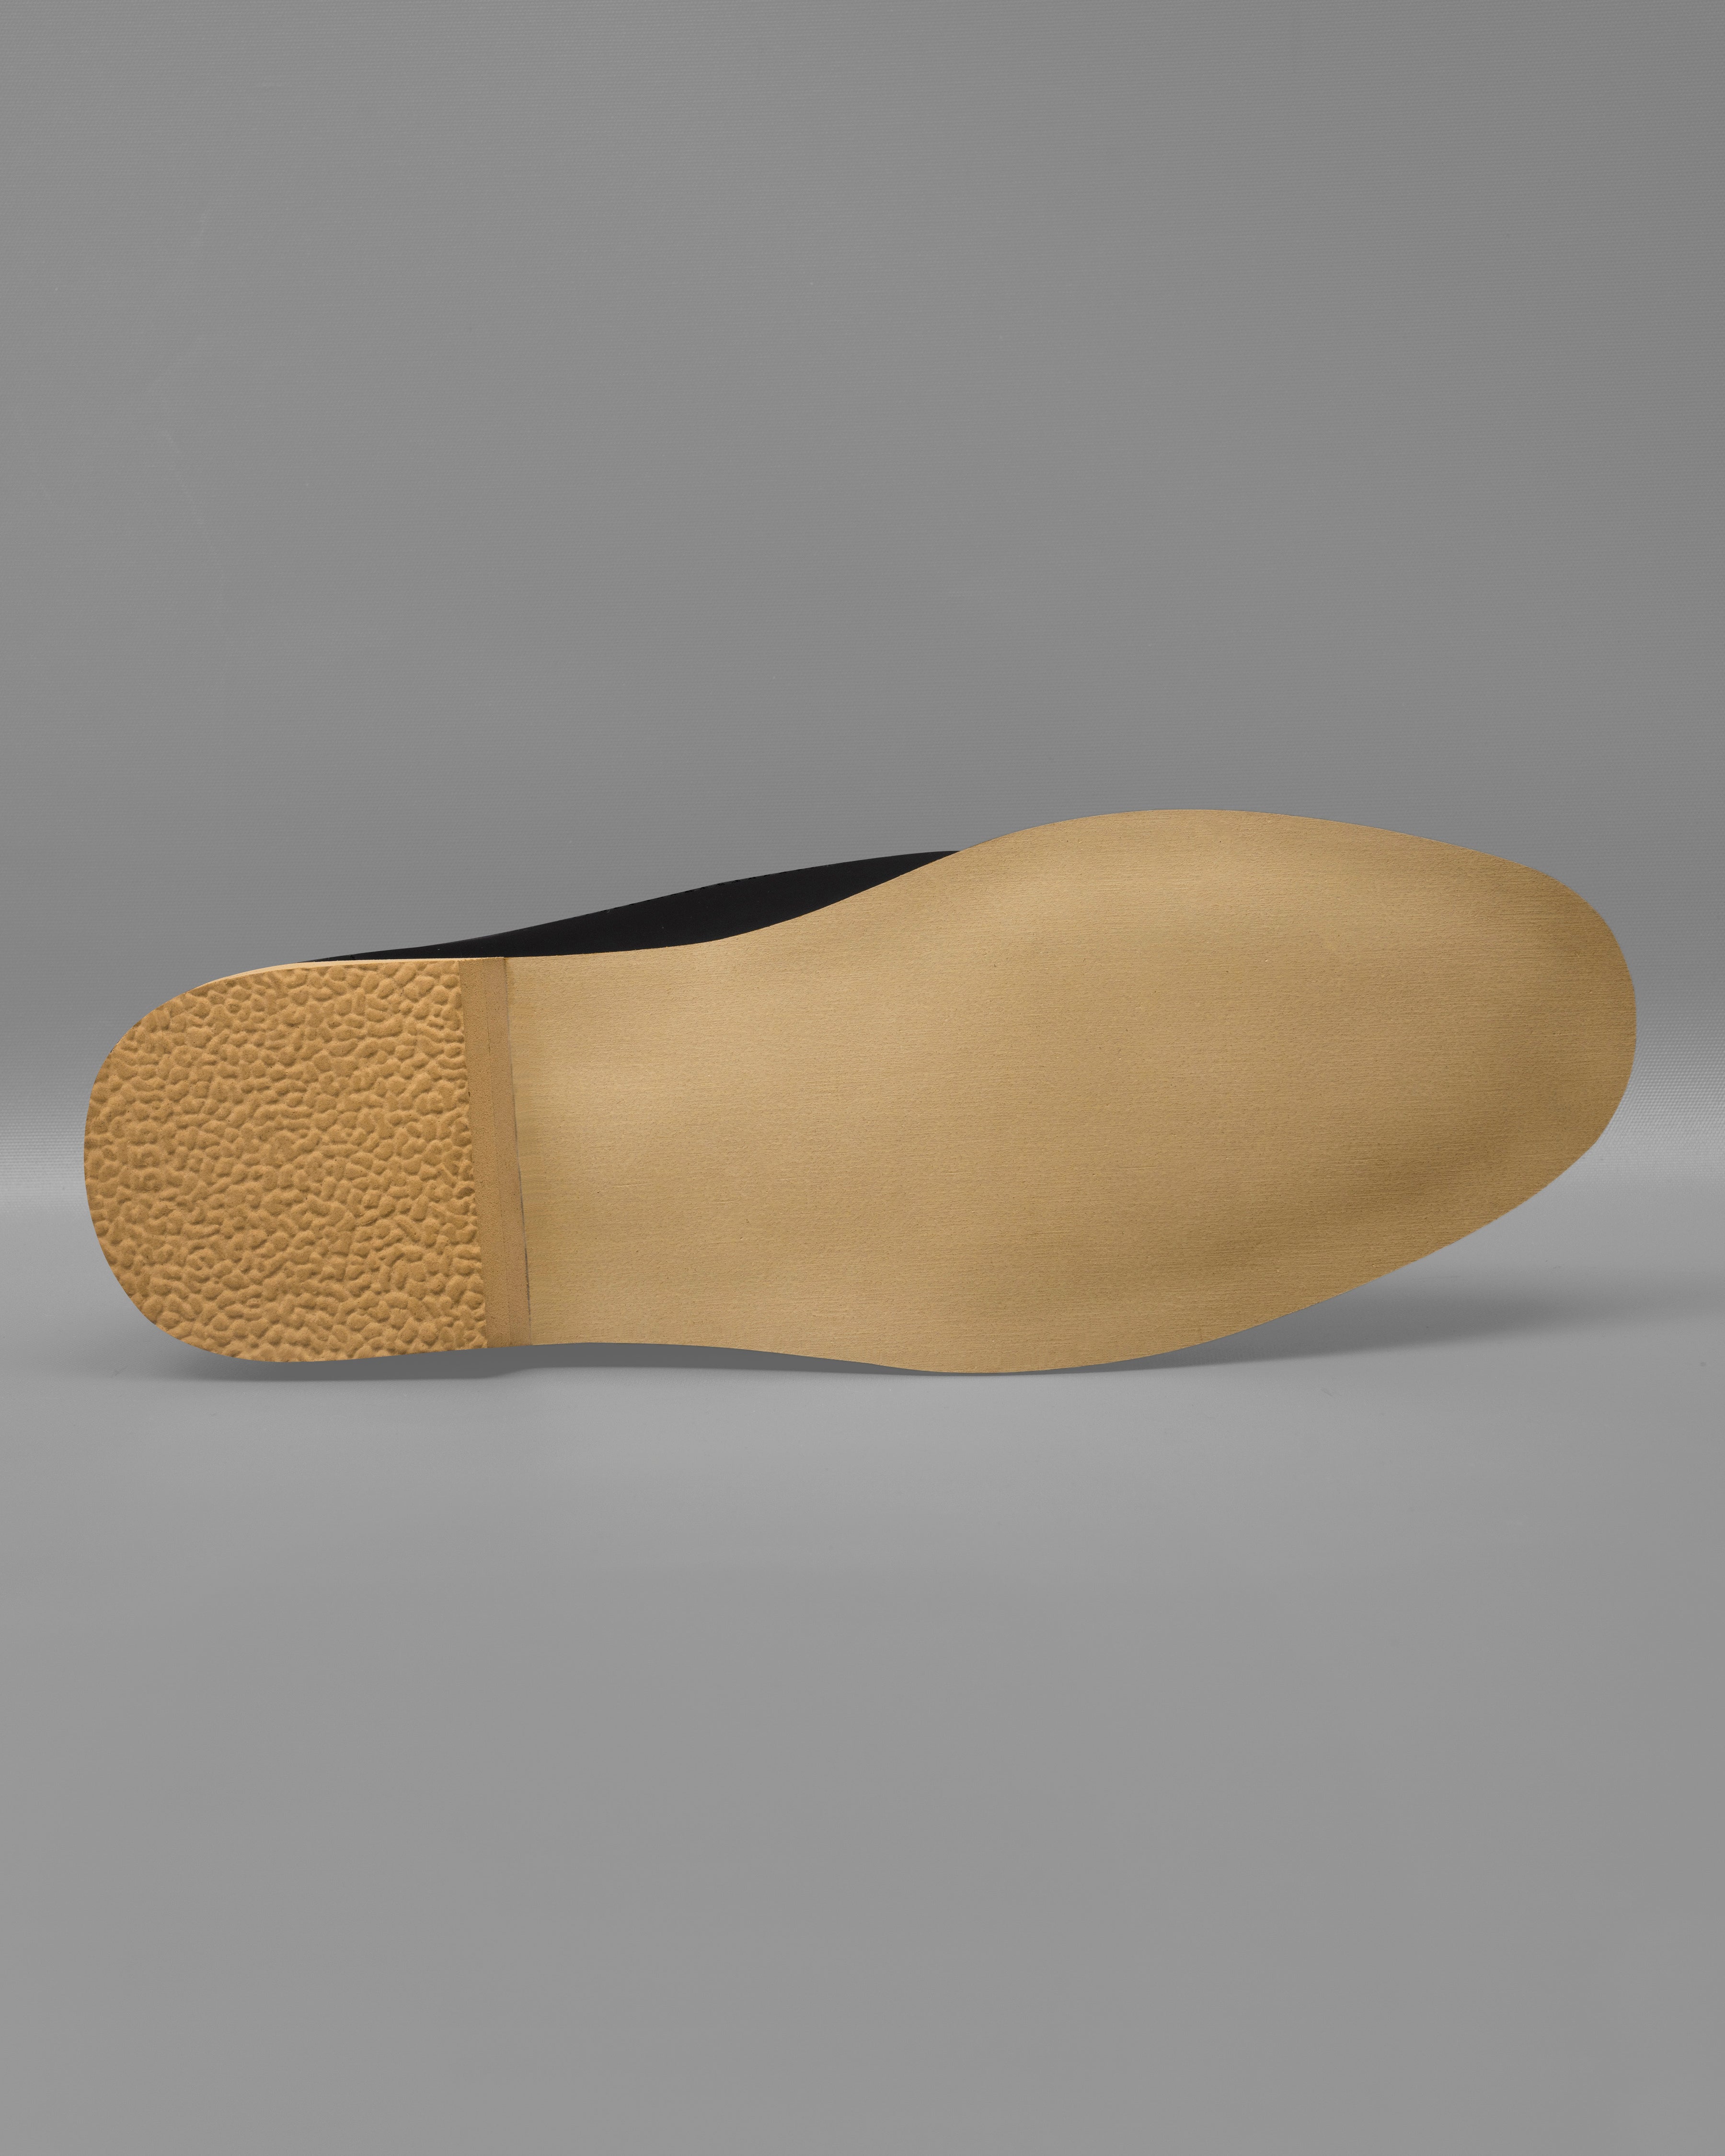 Jade Black Golden Zardosi Vegan Leather Hand stitched Slip-On Shoes FT103-6, FT103-7, FT103-8, FT103-9, FT103-10, FT103-11